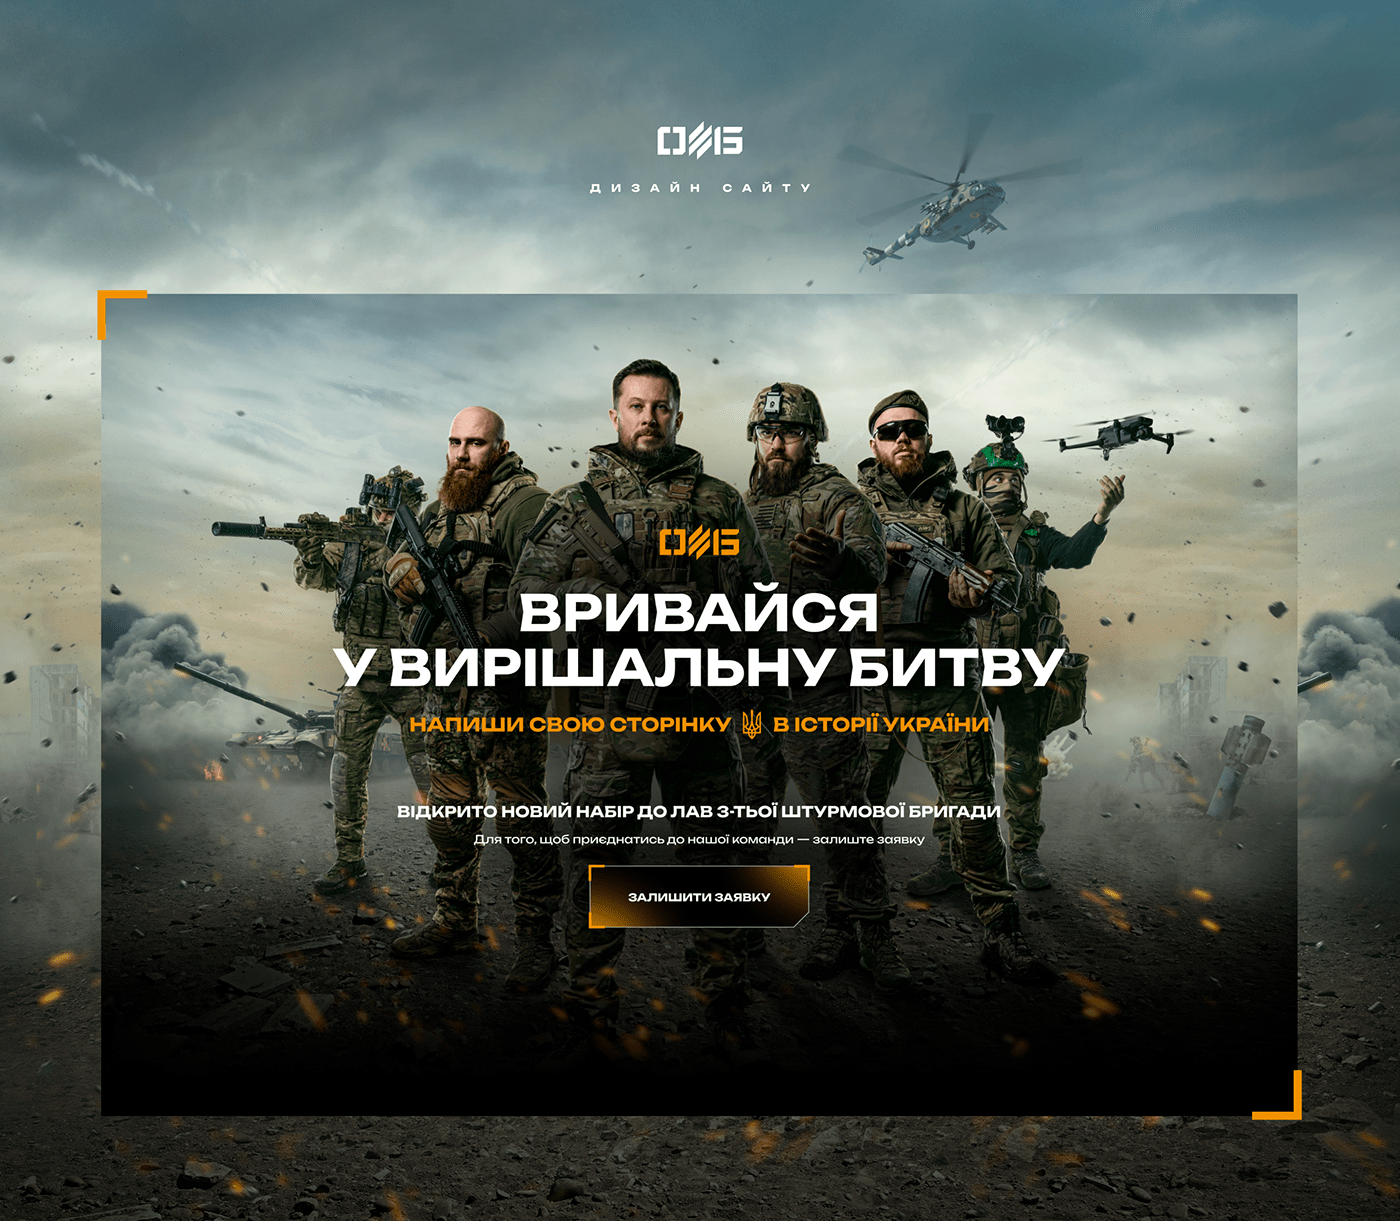 дизайн сайта landing page лендинг азов украина